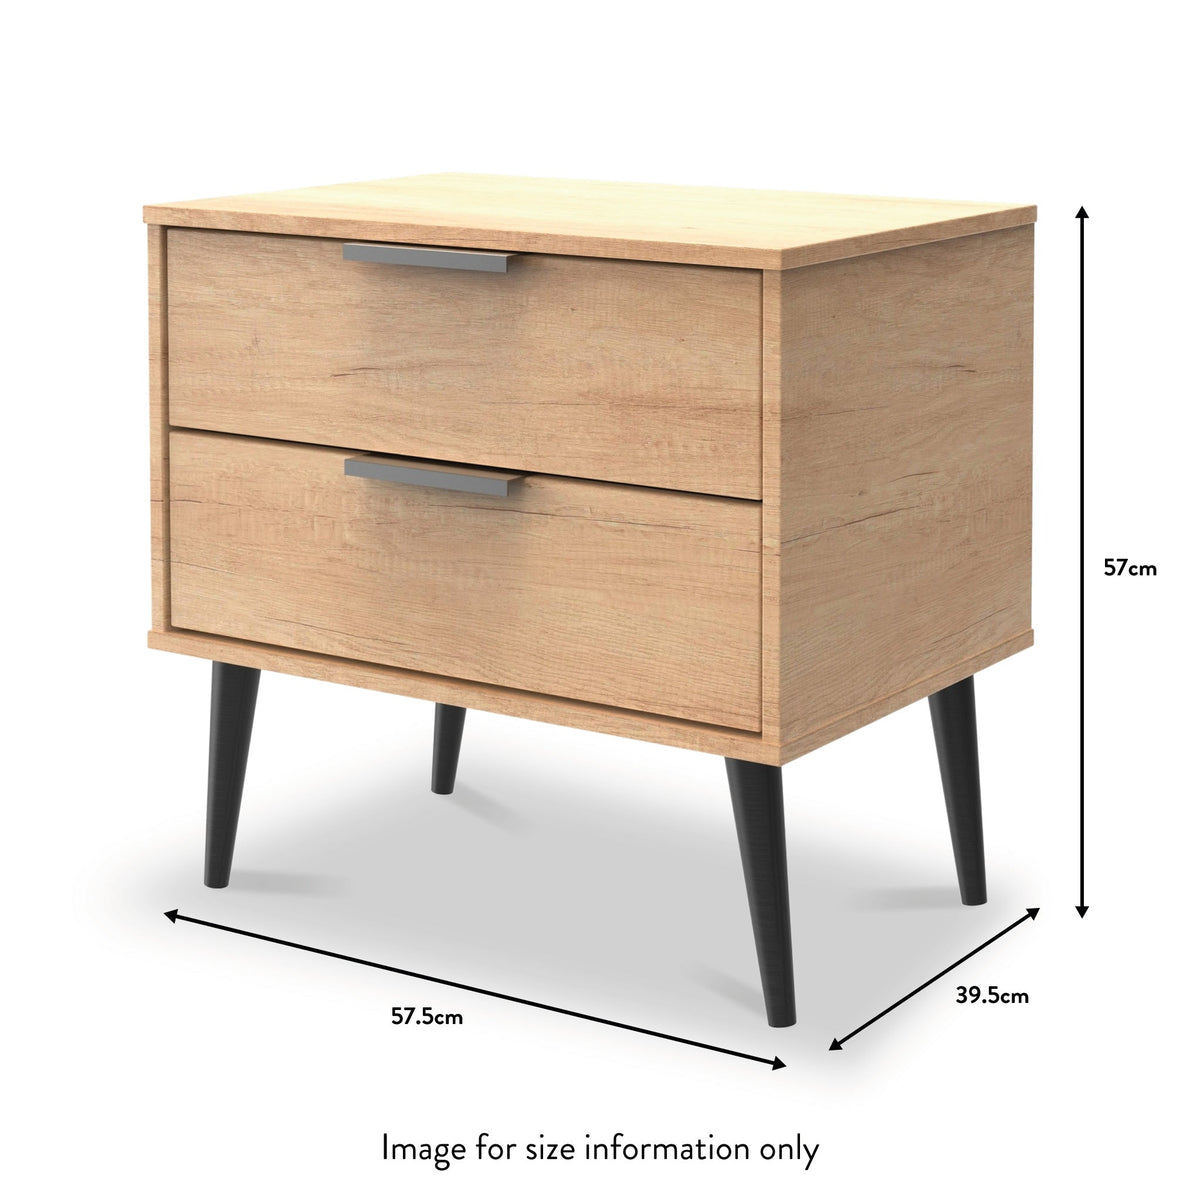 Asher Light Oak 2 Drawer Side Table dimensions